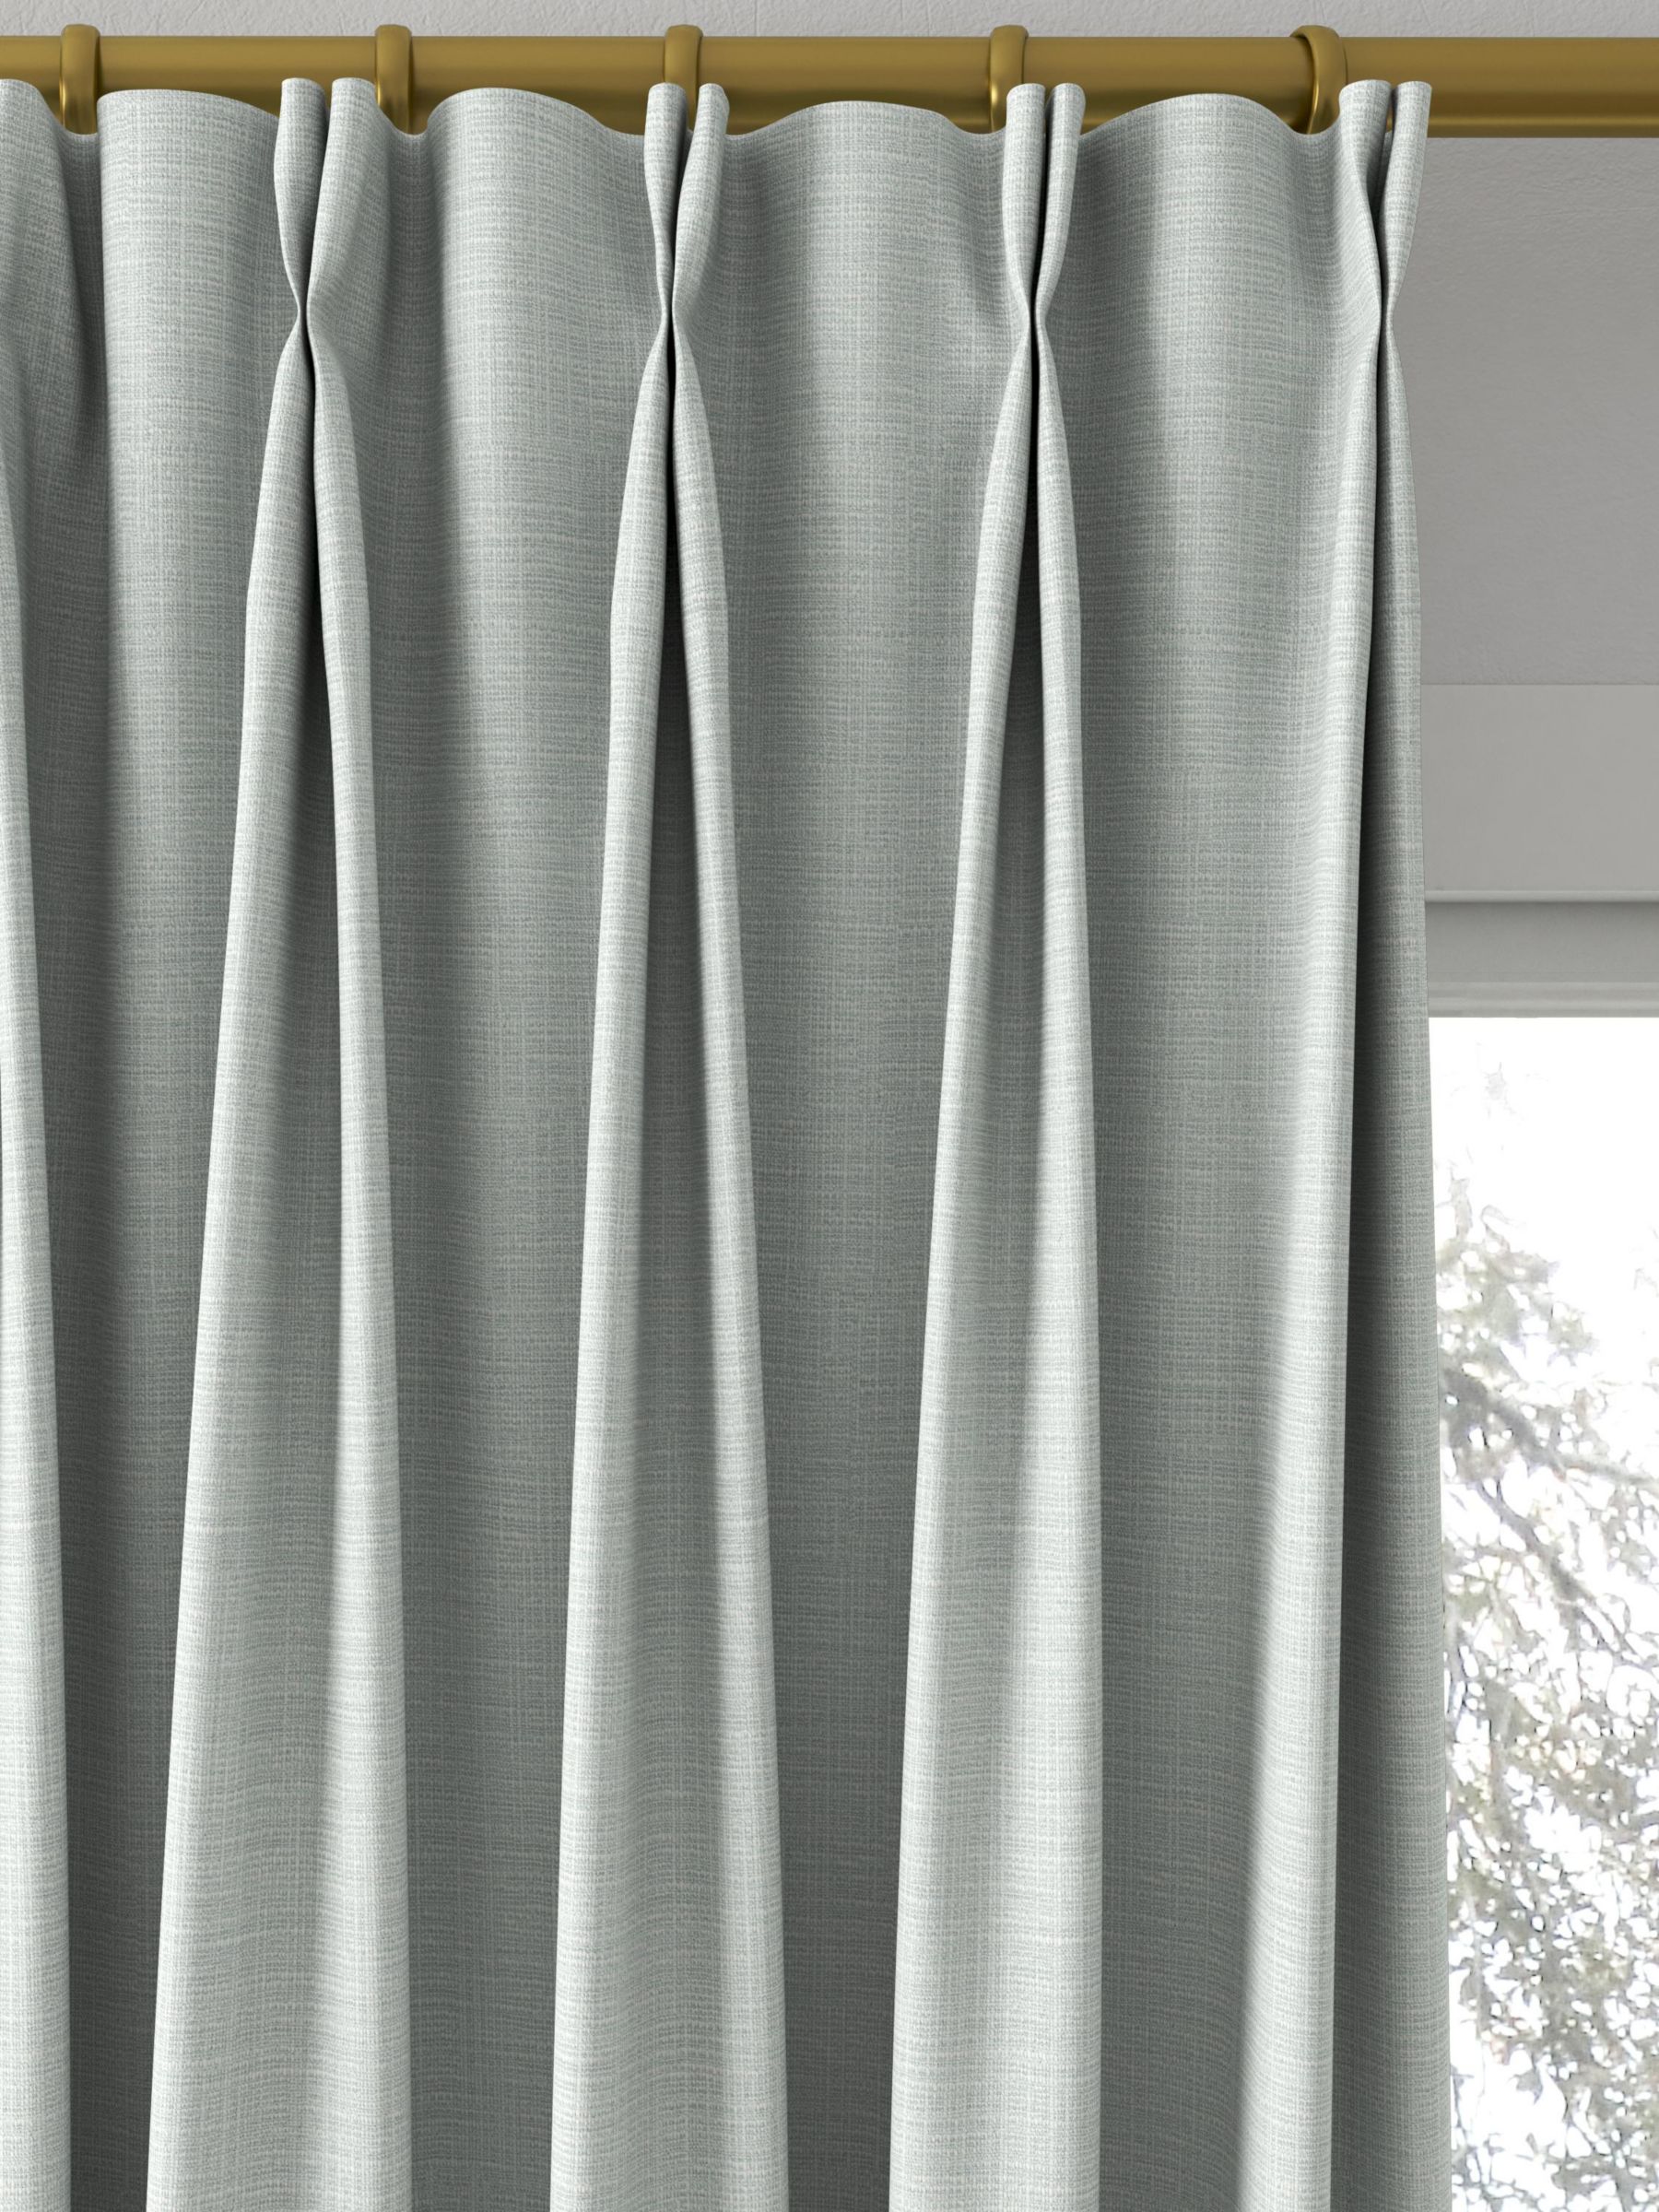 Prestigious Textiles Chichester Made to Measure Curtains, Stone